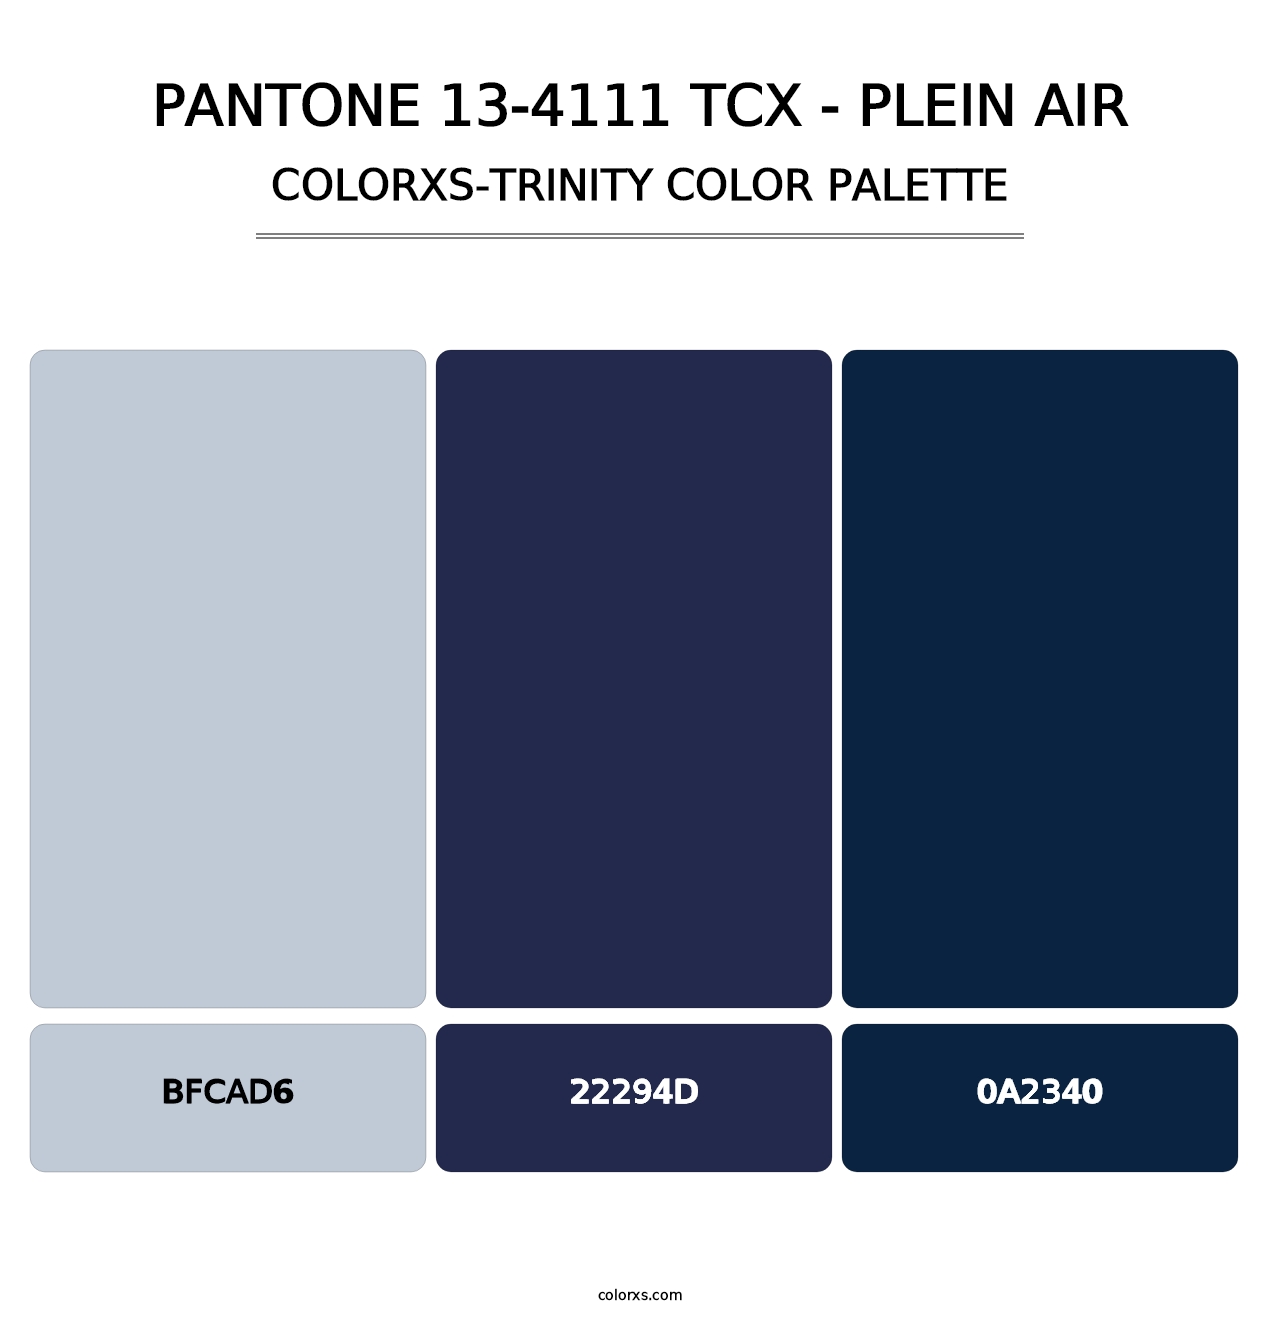 PANTONE 13-4111 TCX - Plein Air - Colorxs Trinity Palette